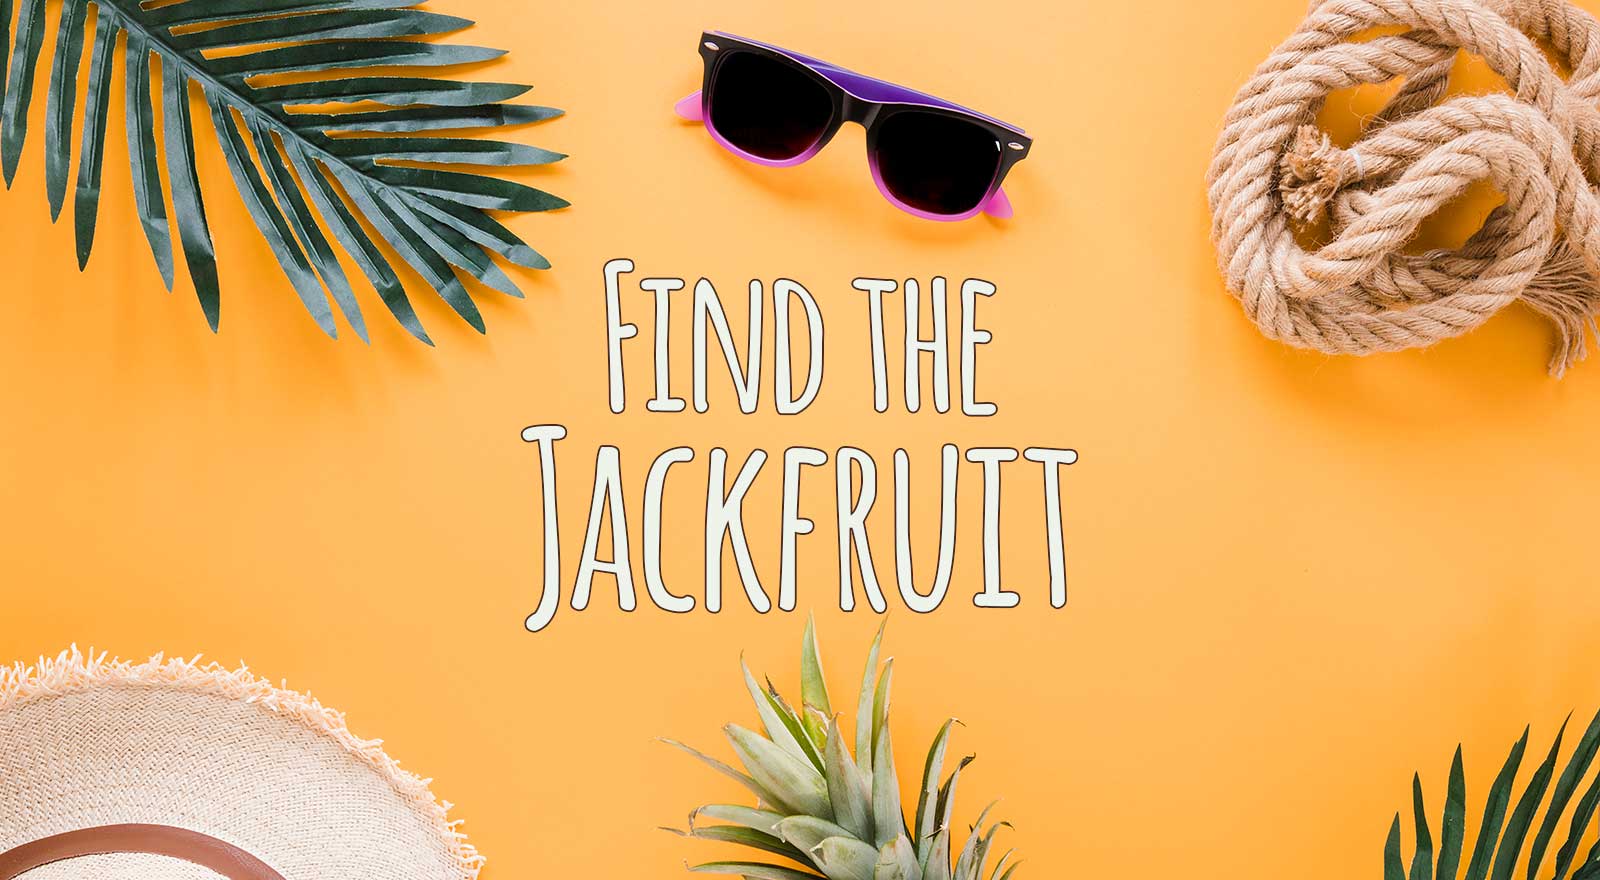 Text Jackfruit